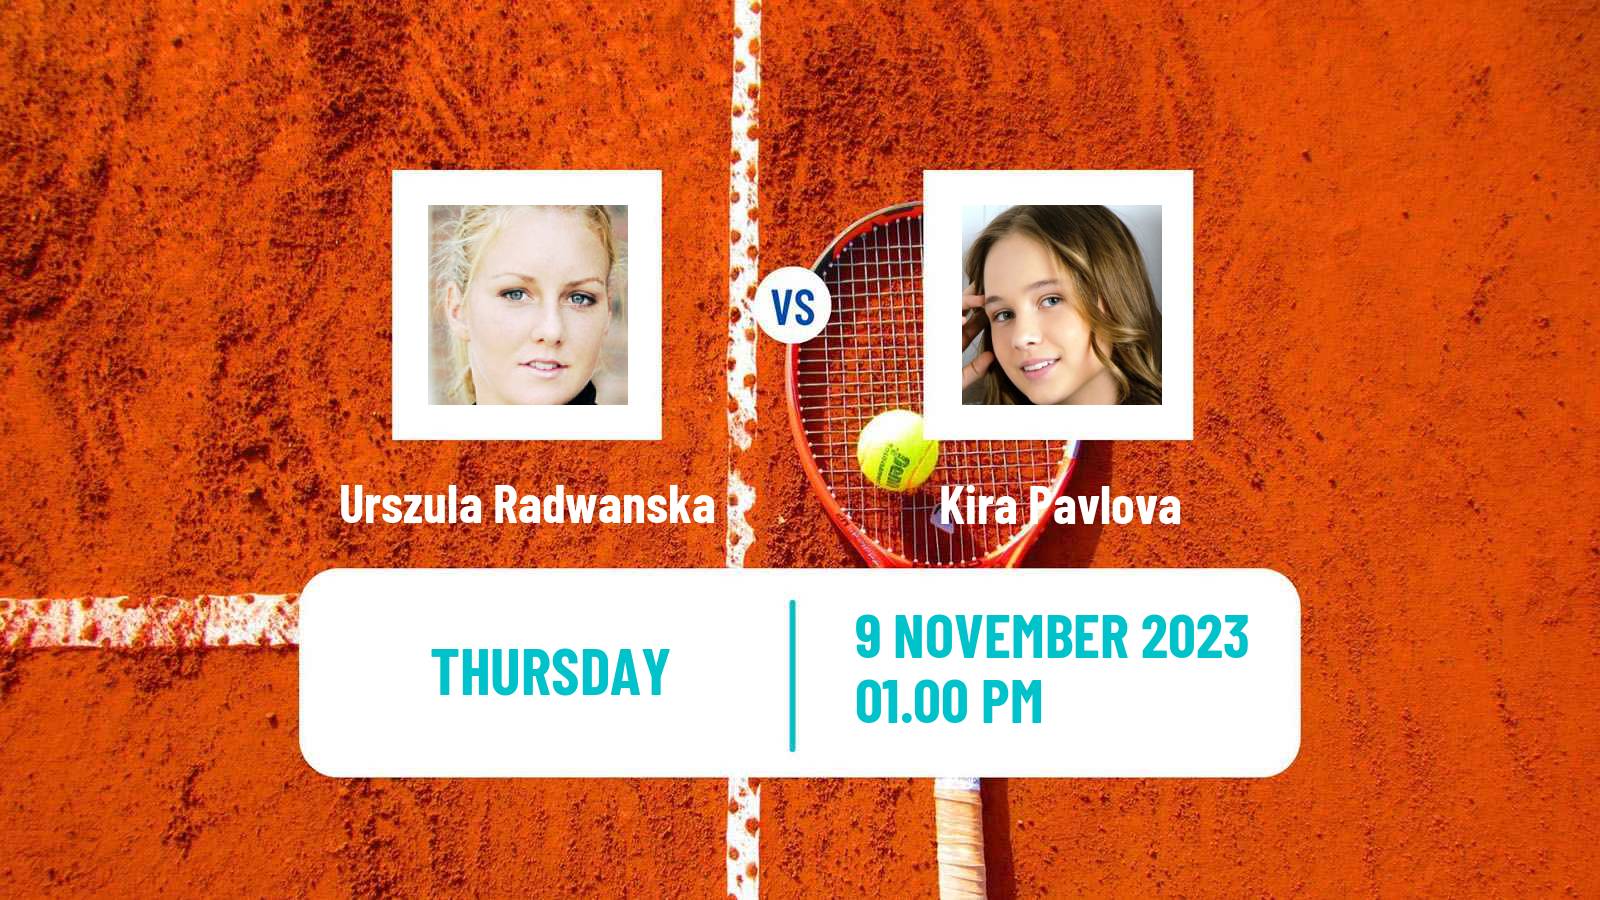 Tennis ITF W60 H Calgary Women Urszula Radwanska - Kira Pavlova